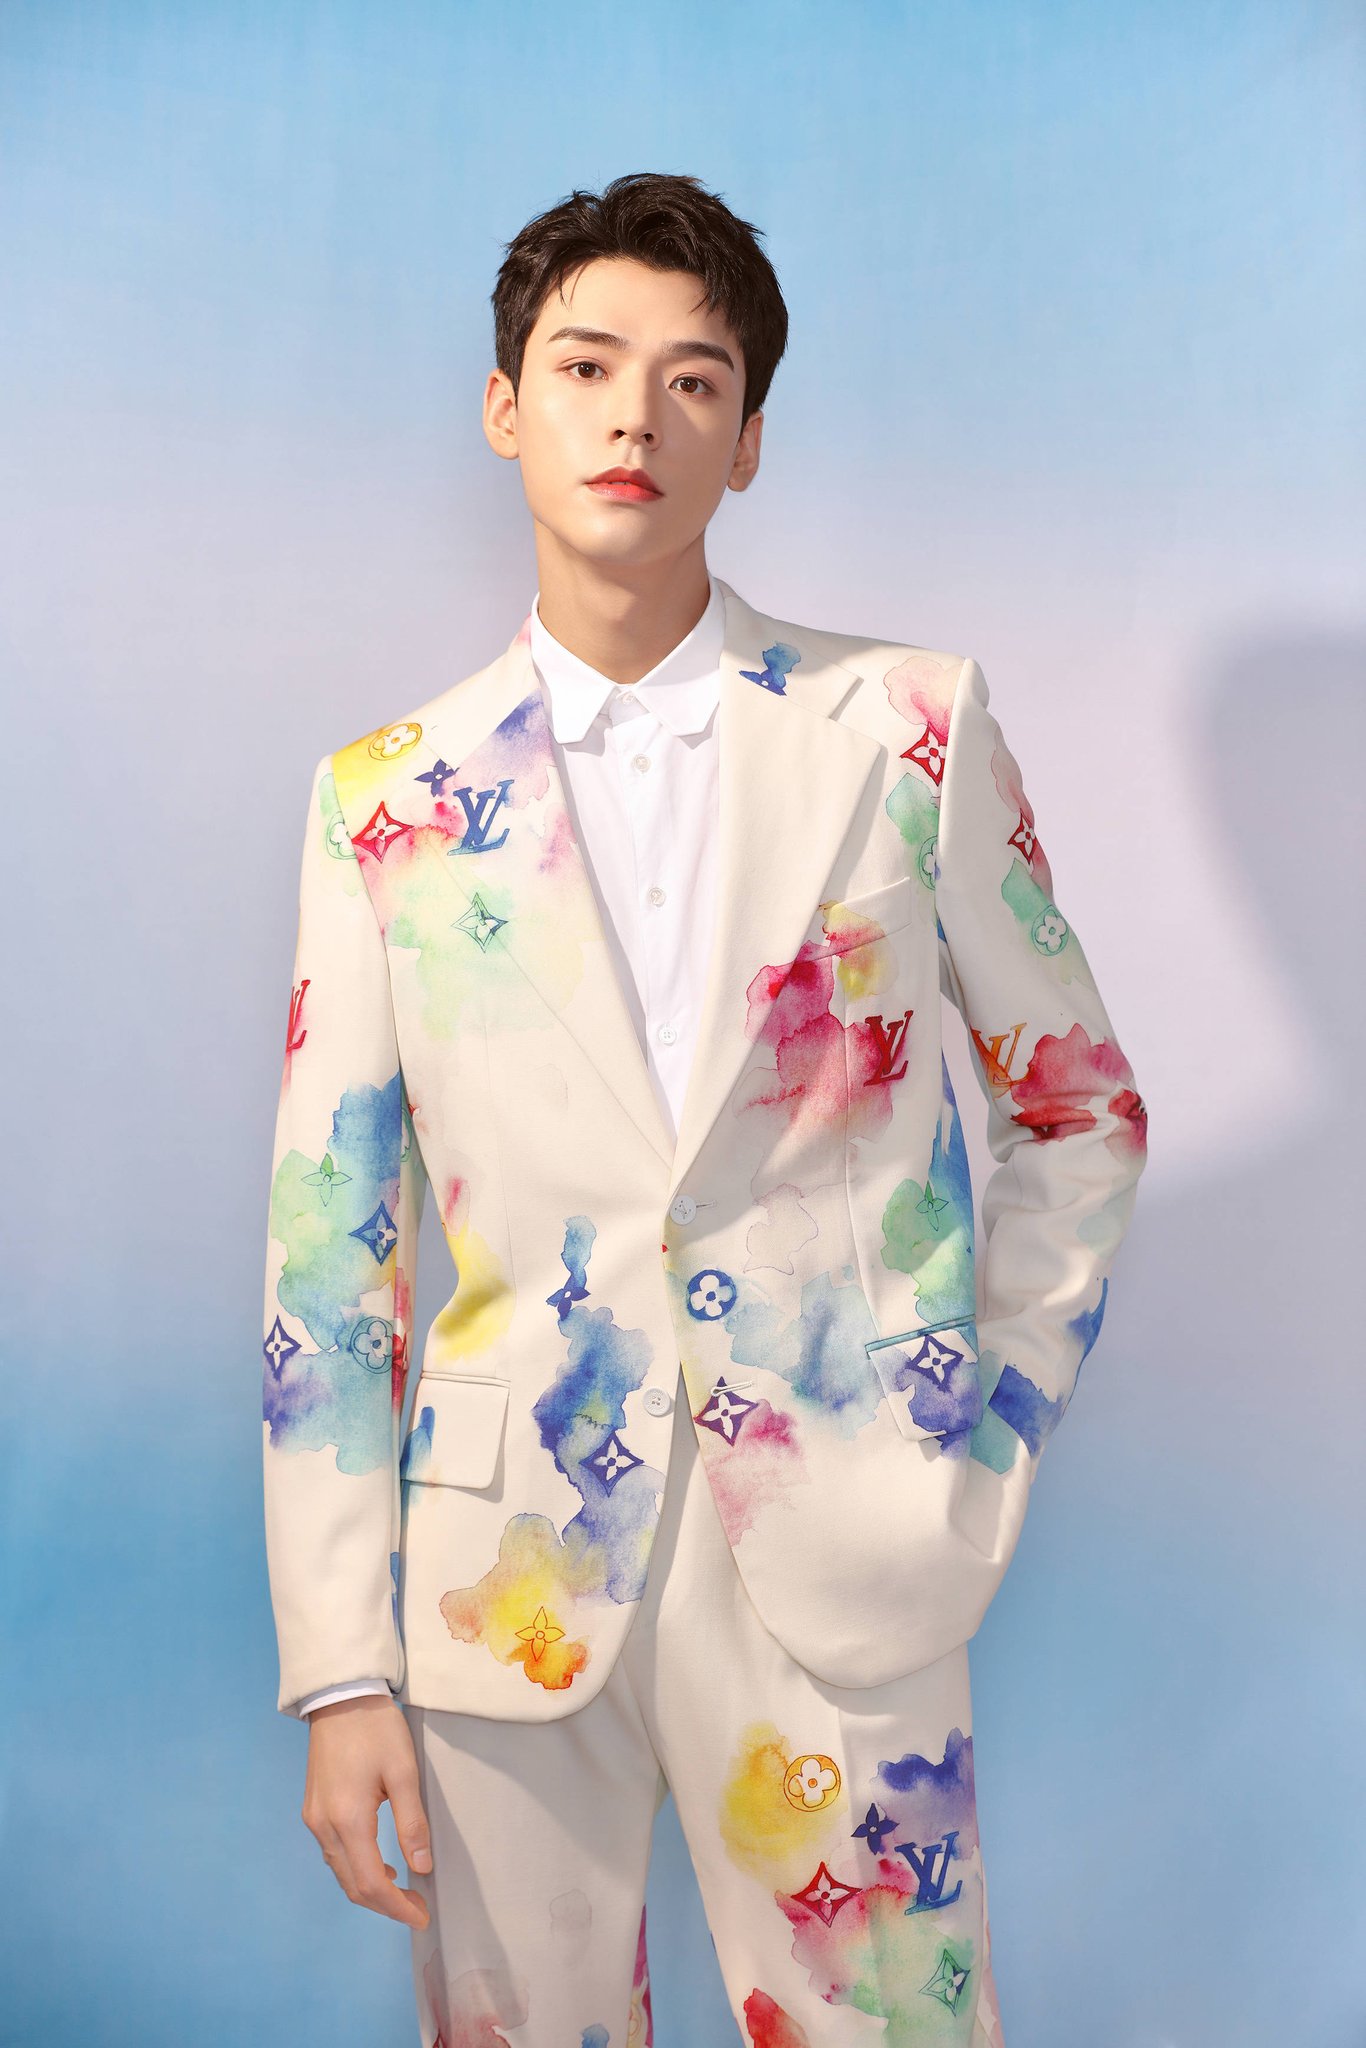 Actor Gong Jun attends Louis Vuitton Fashion Show on September 16